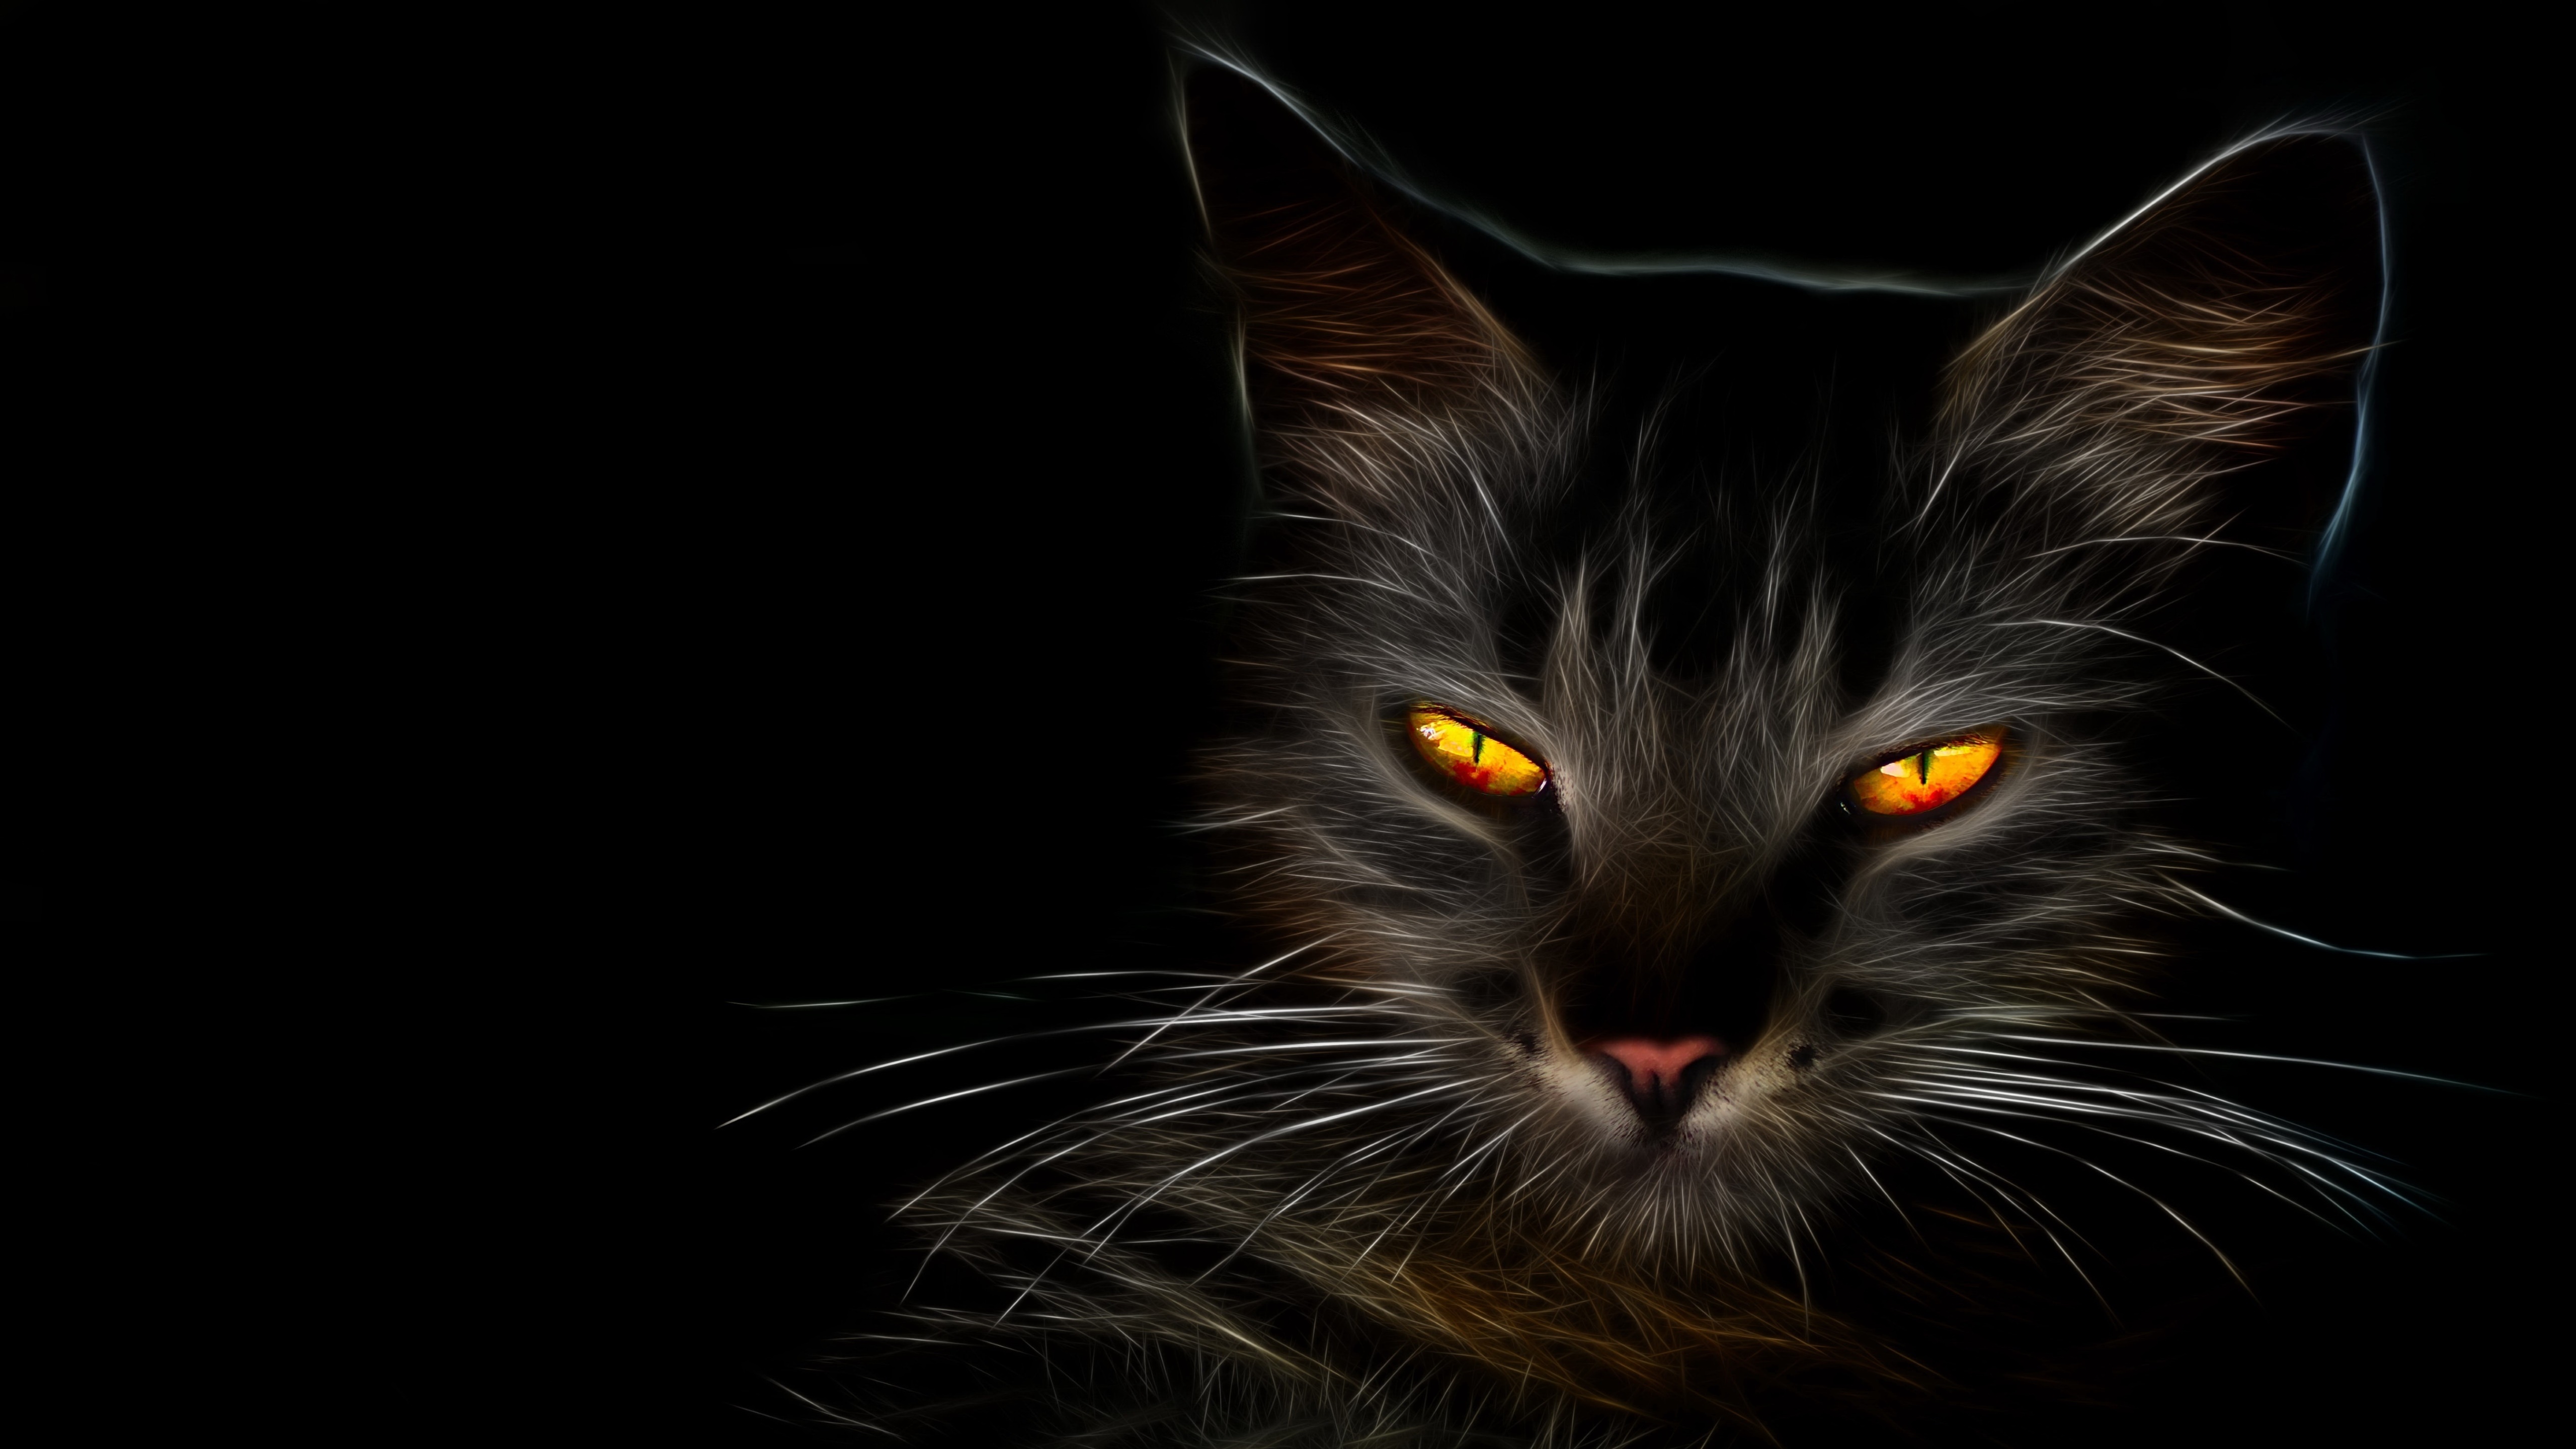  Black  Cat  with Amber Eyes  4k Ultra HD Wallpaper  